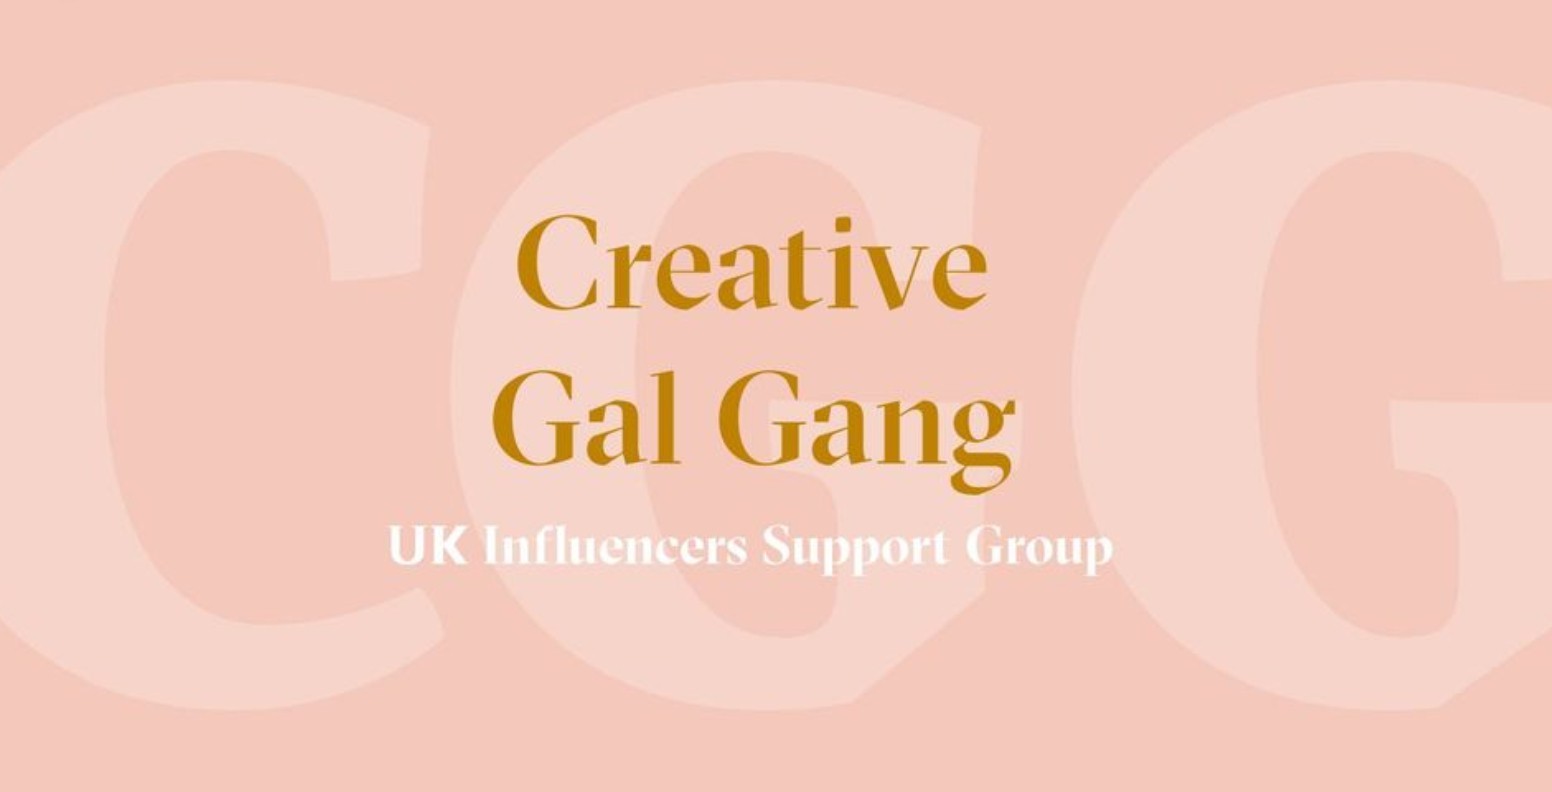 <img src="creative.jpg" alt="creative gal gang facebook group"/> 